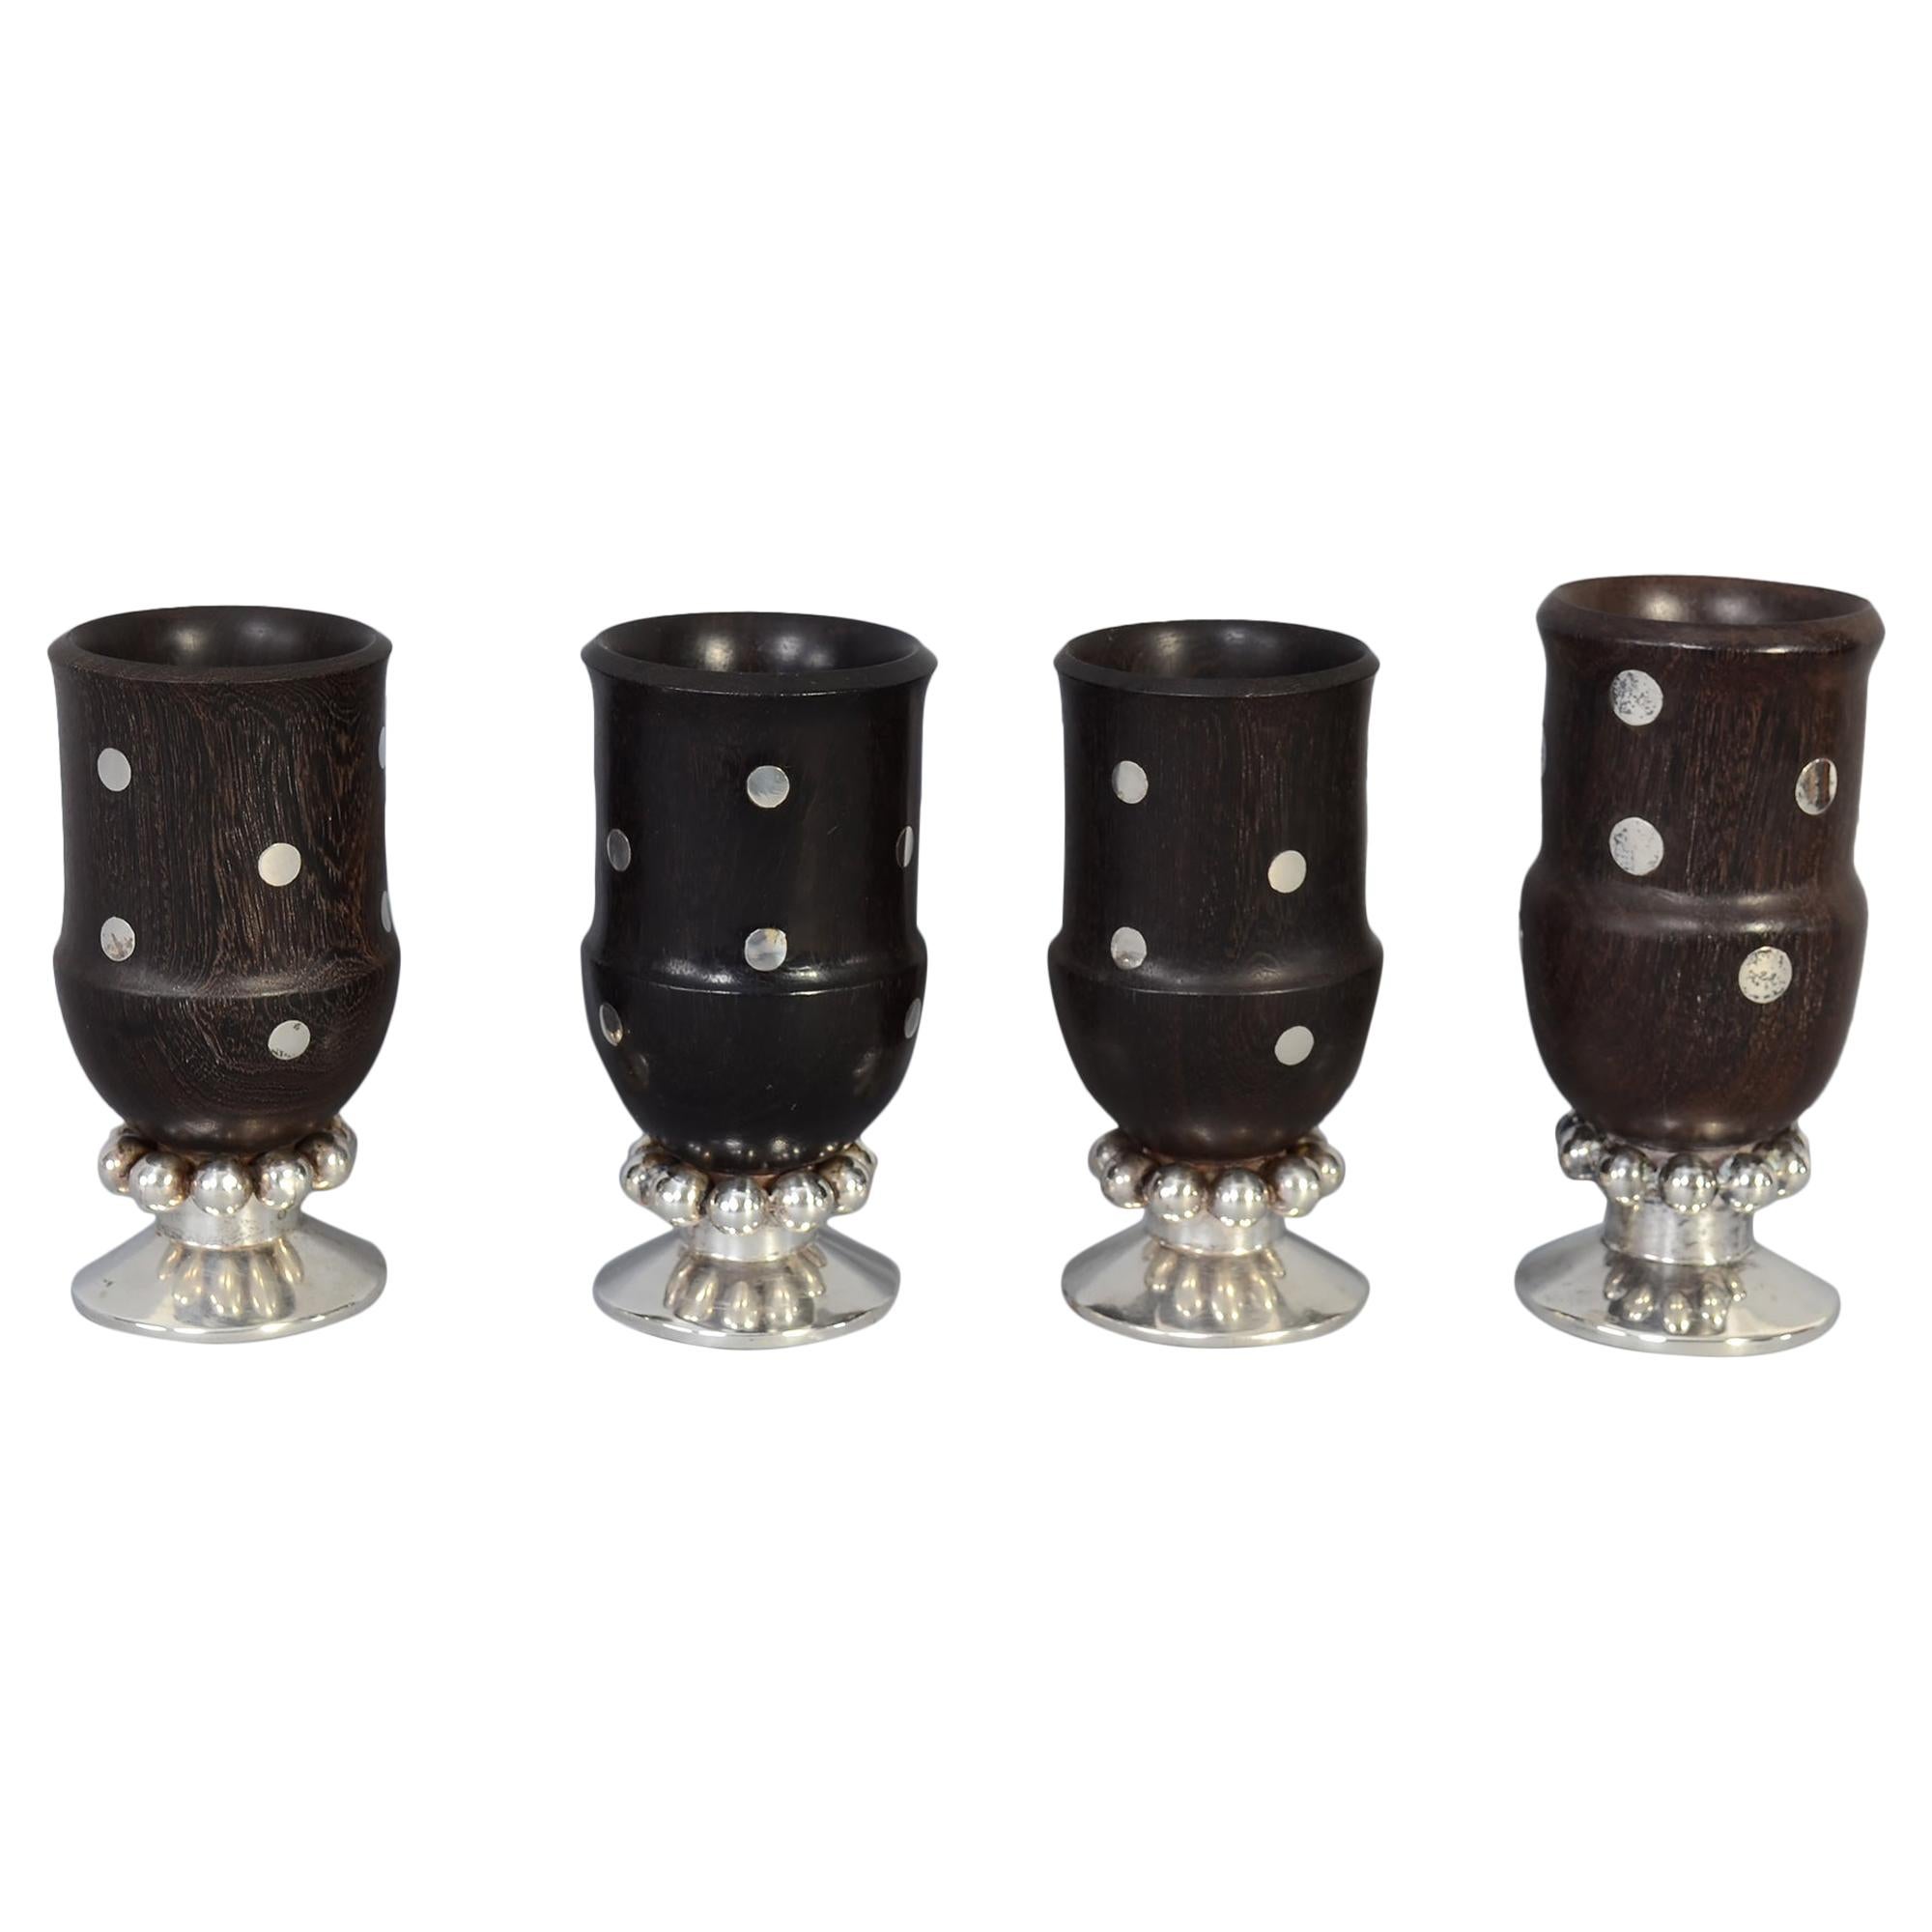 Set of William Spratling Wood and Silver Goblets